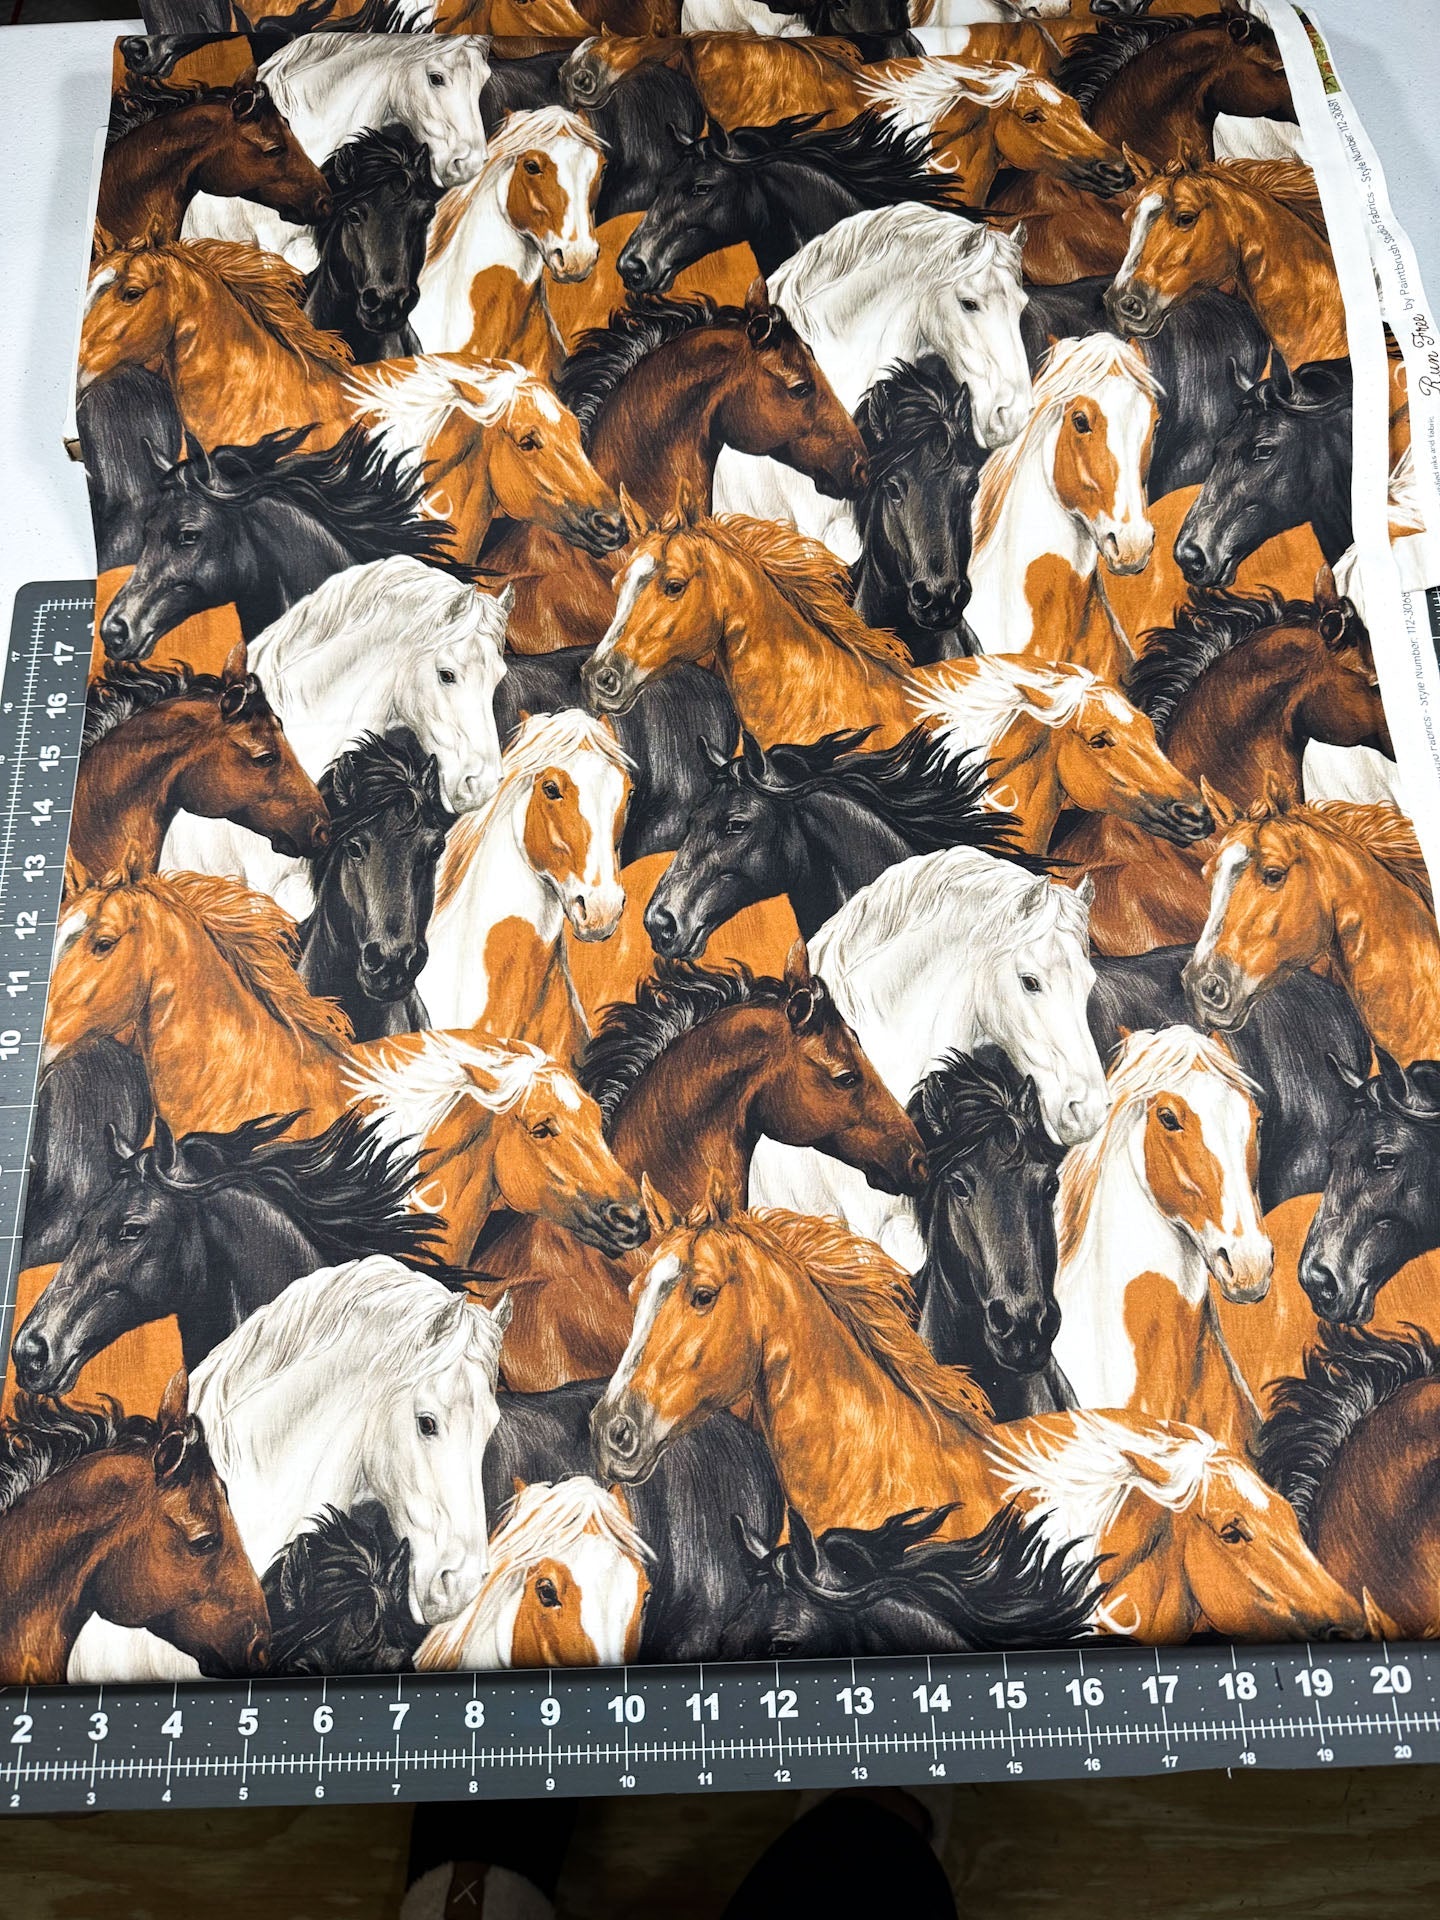 Run Free Horses fabric Paintbrush Studios horse cotton fabric